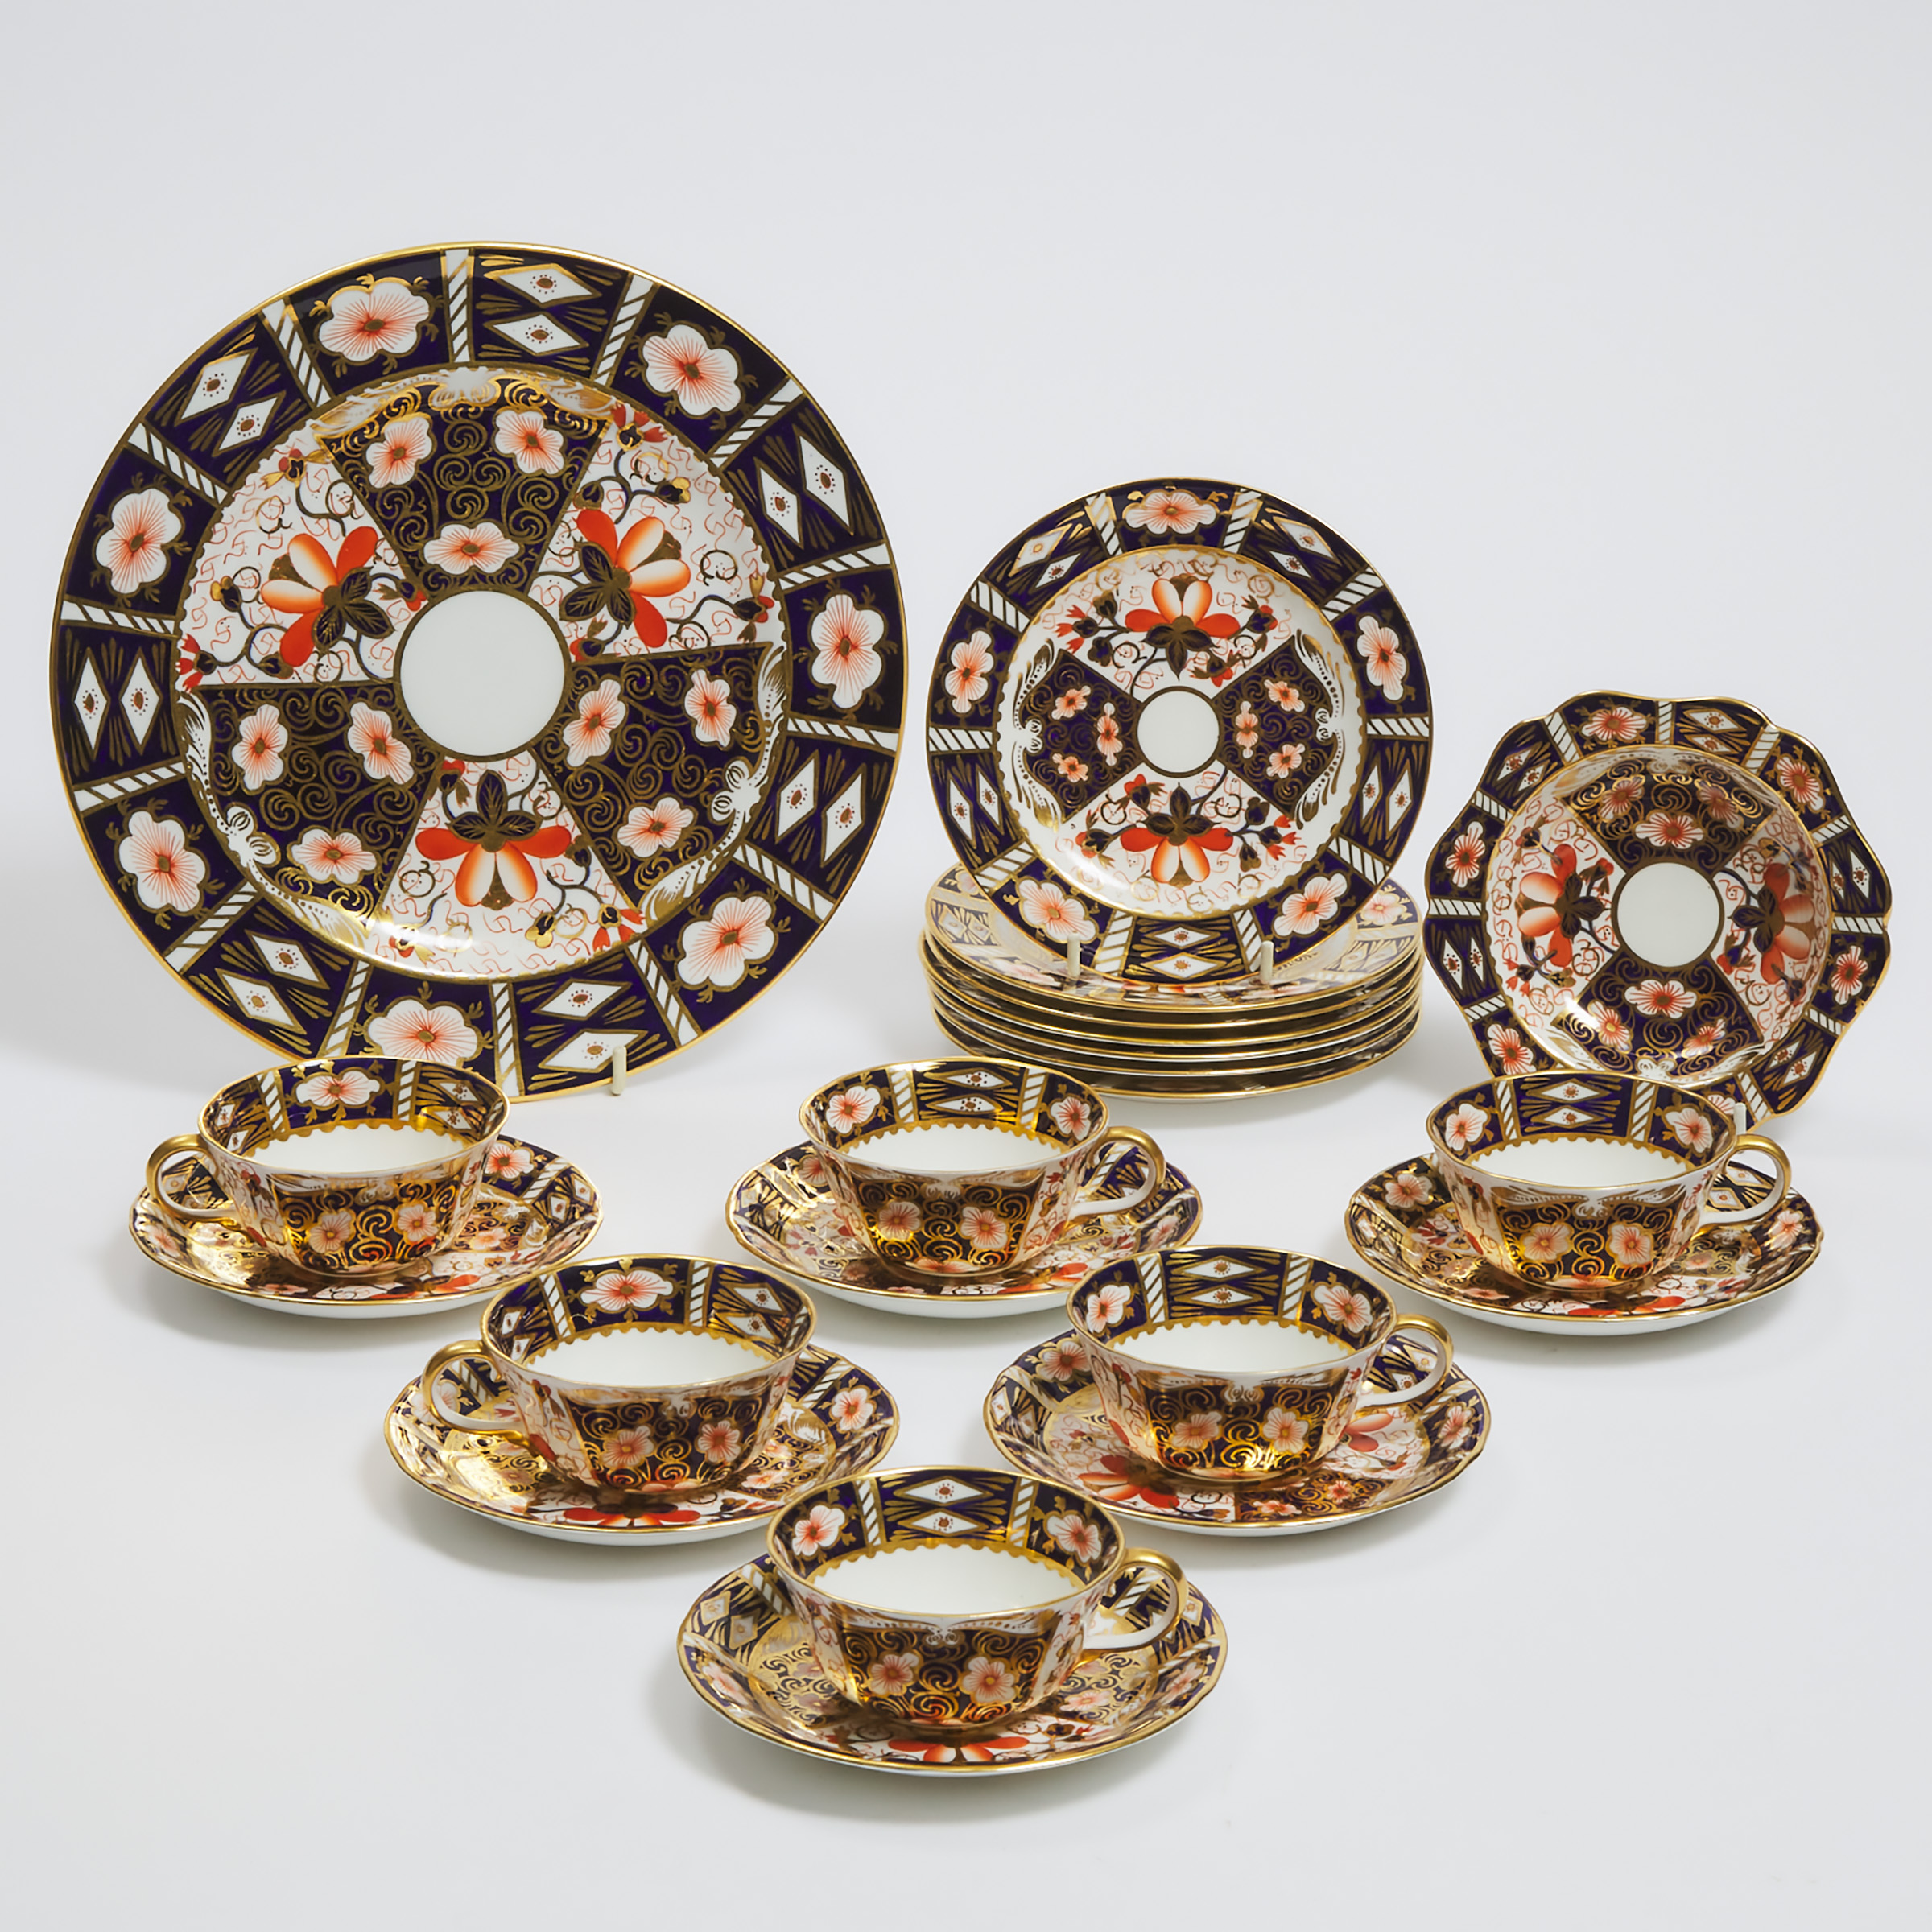 Royal Crown Derby 'Imari' (2451) Pattern Tablewares, 20th century